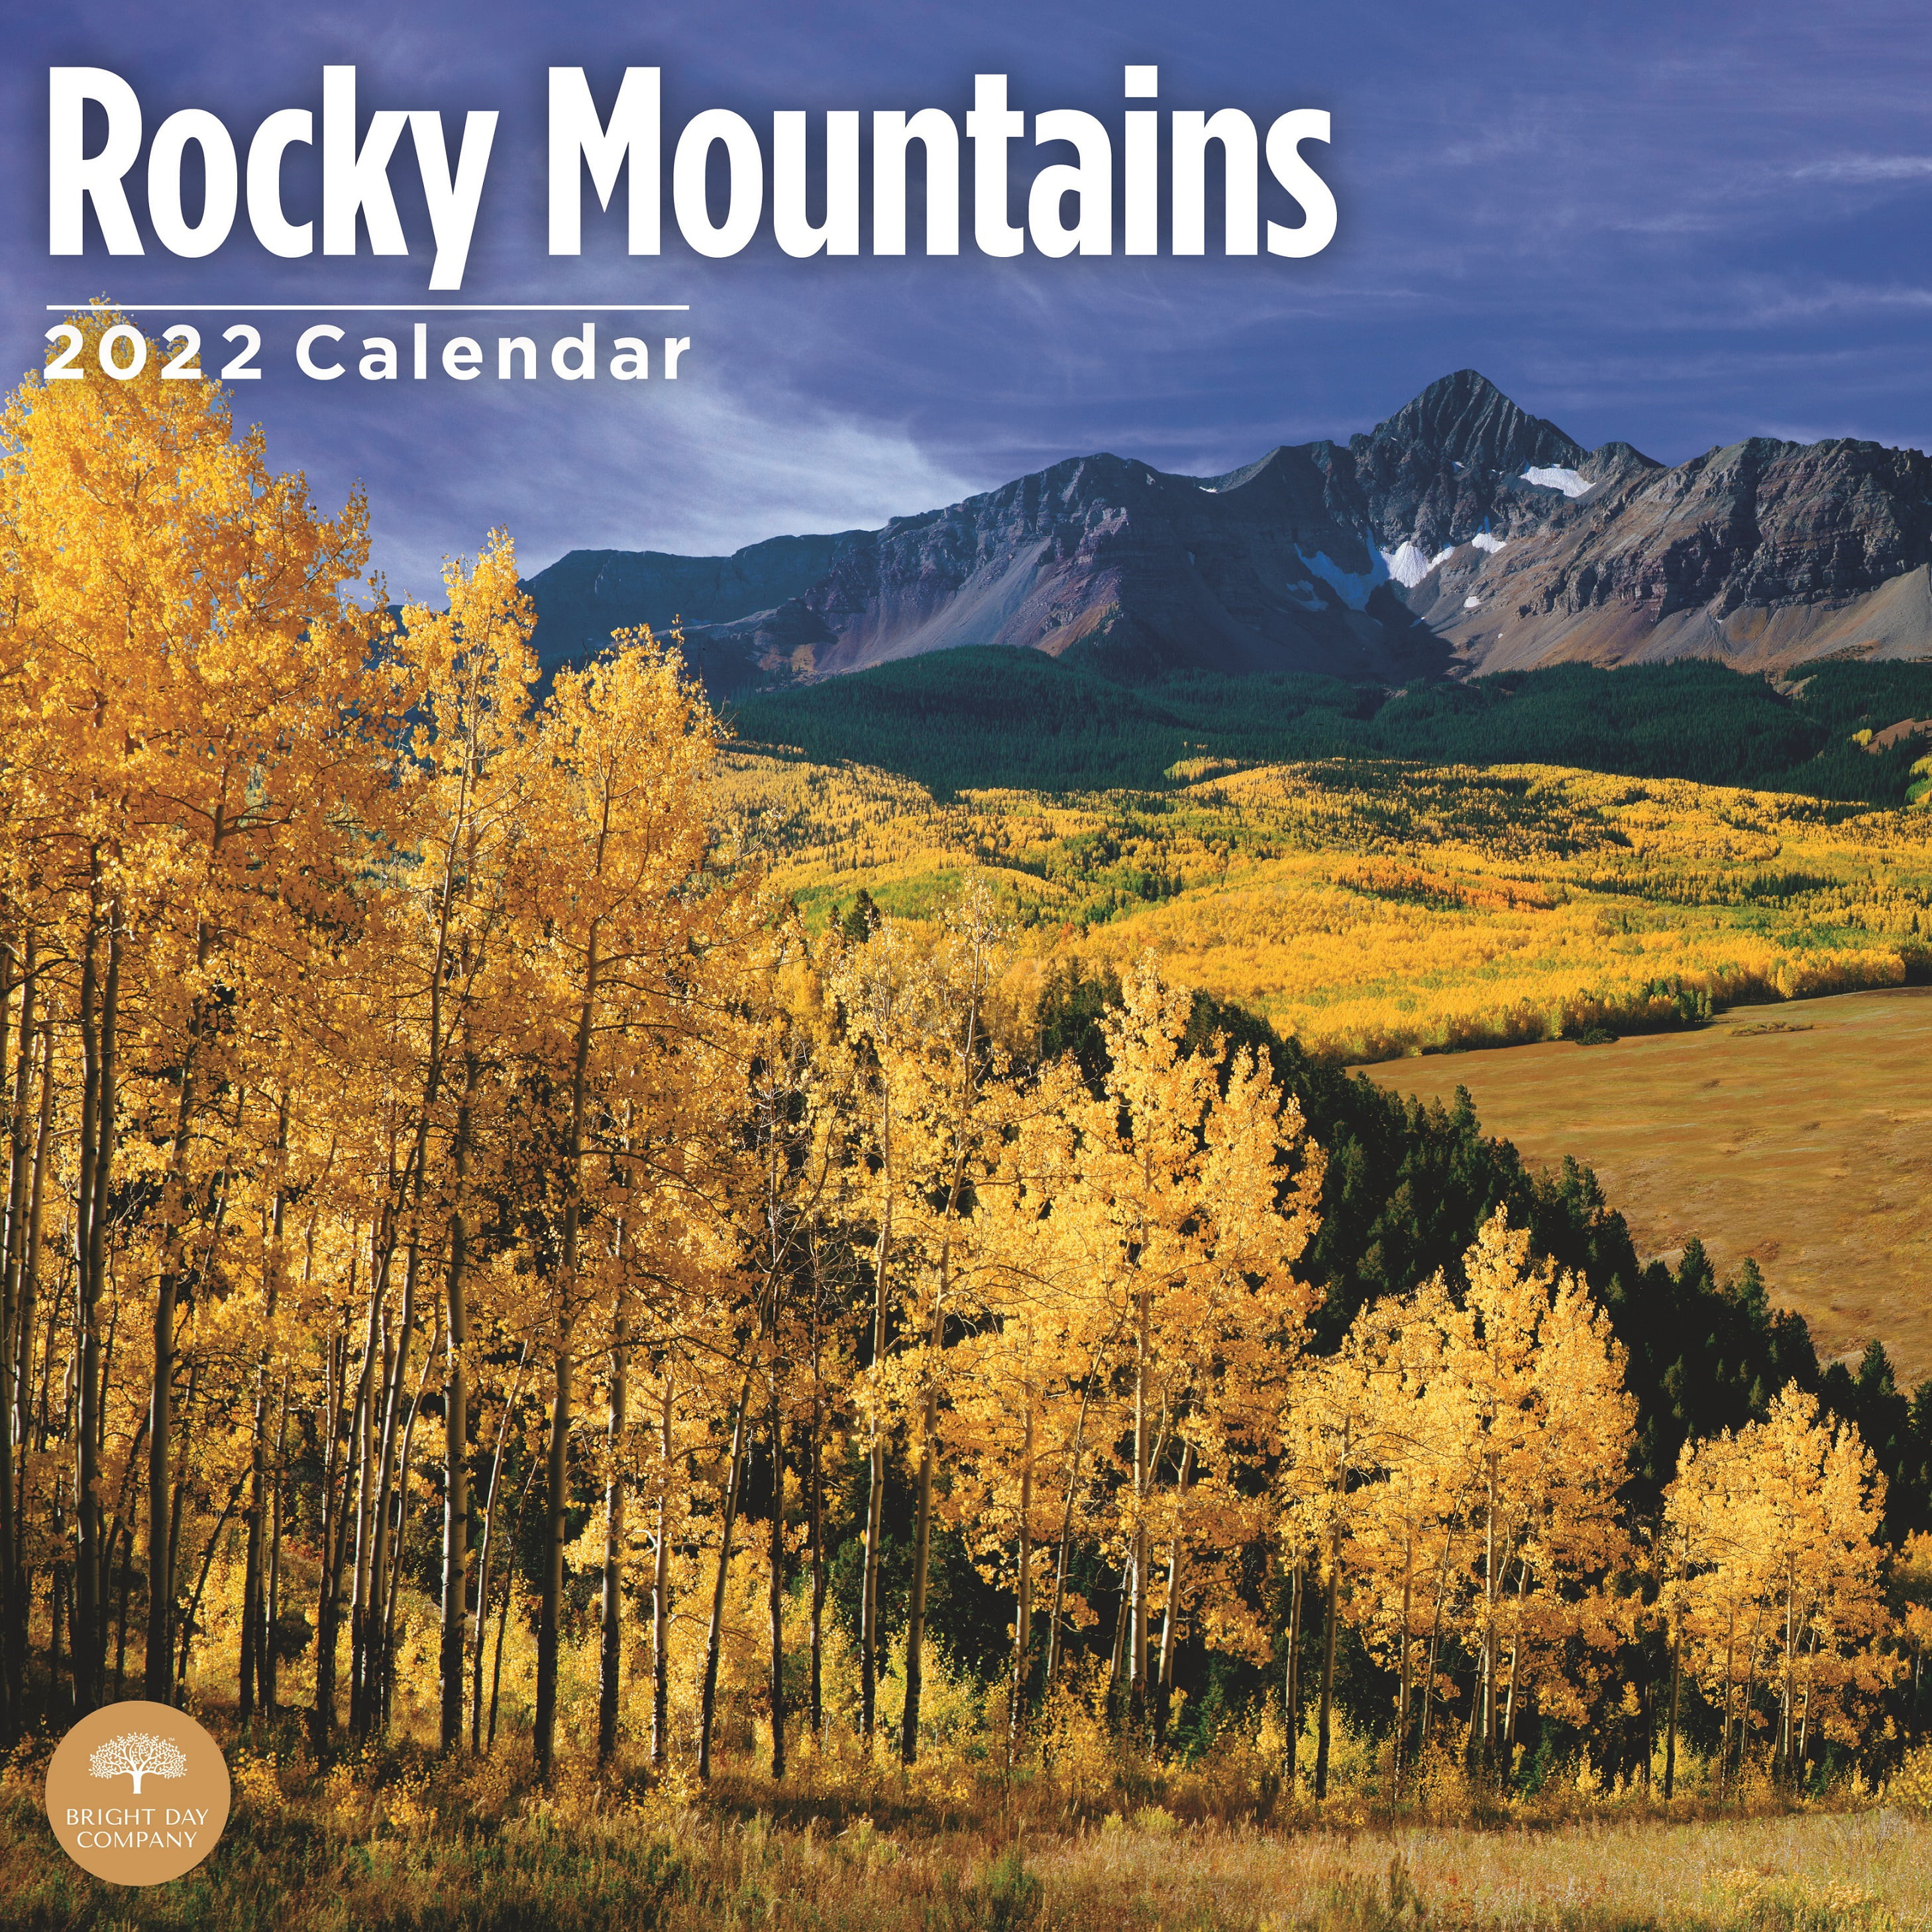 Cu Boulder Calendar Fall 2022 2022 Rocky Mountains Wall Calendar By Bright Day, 12 X 12 Inch - Walmart.com